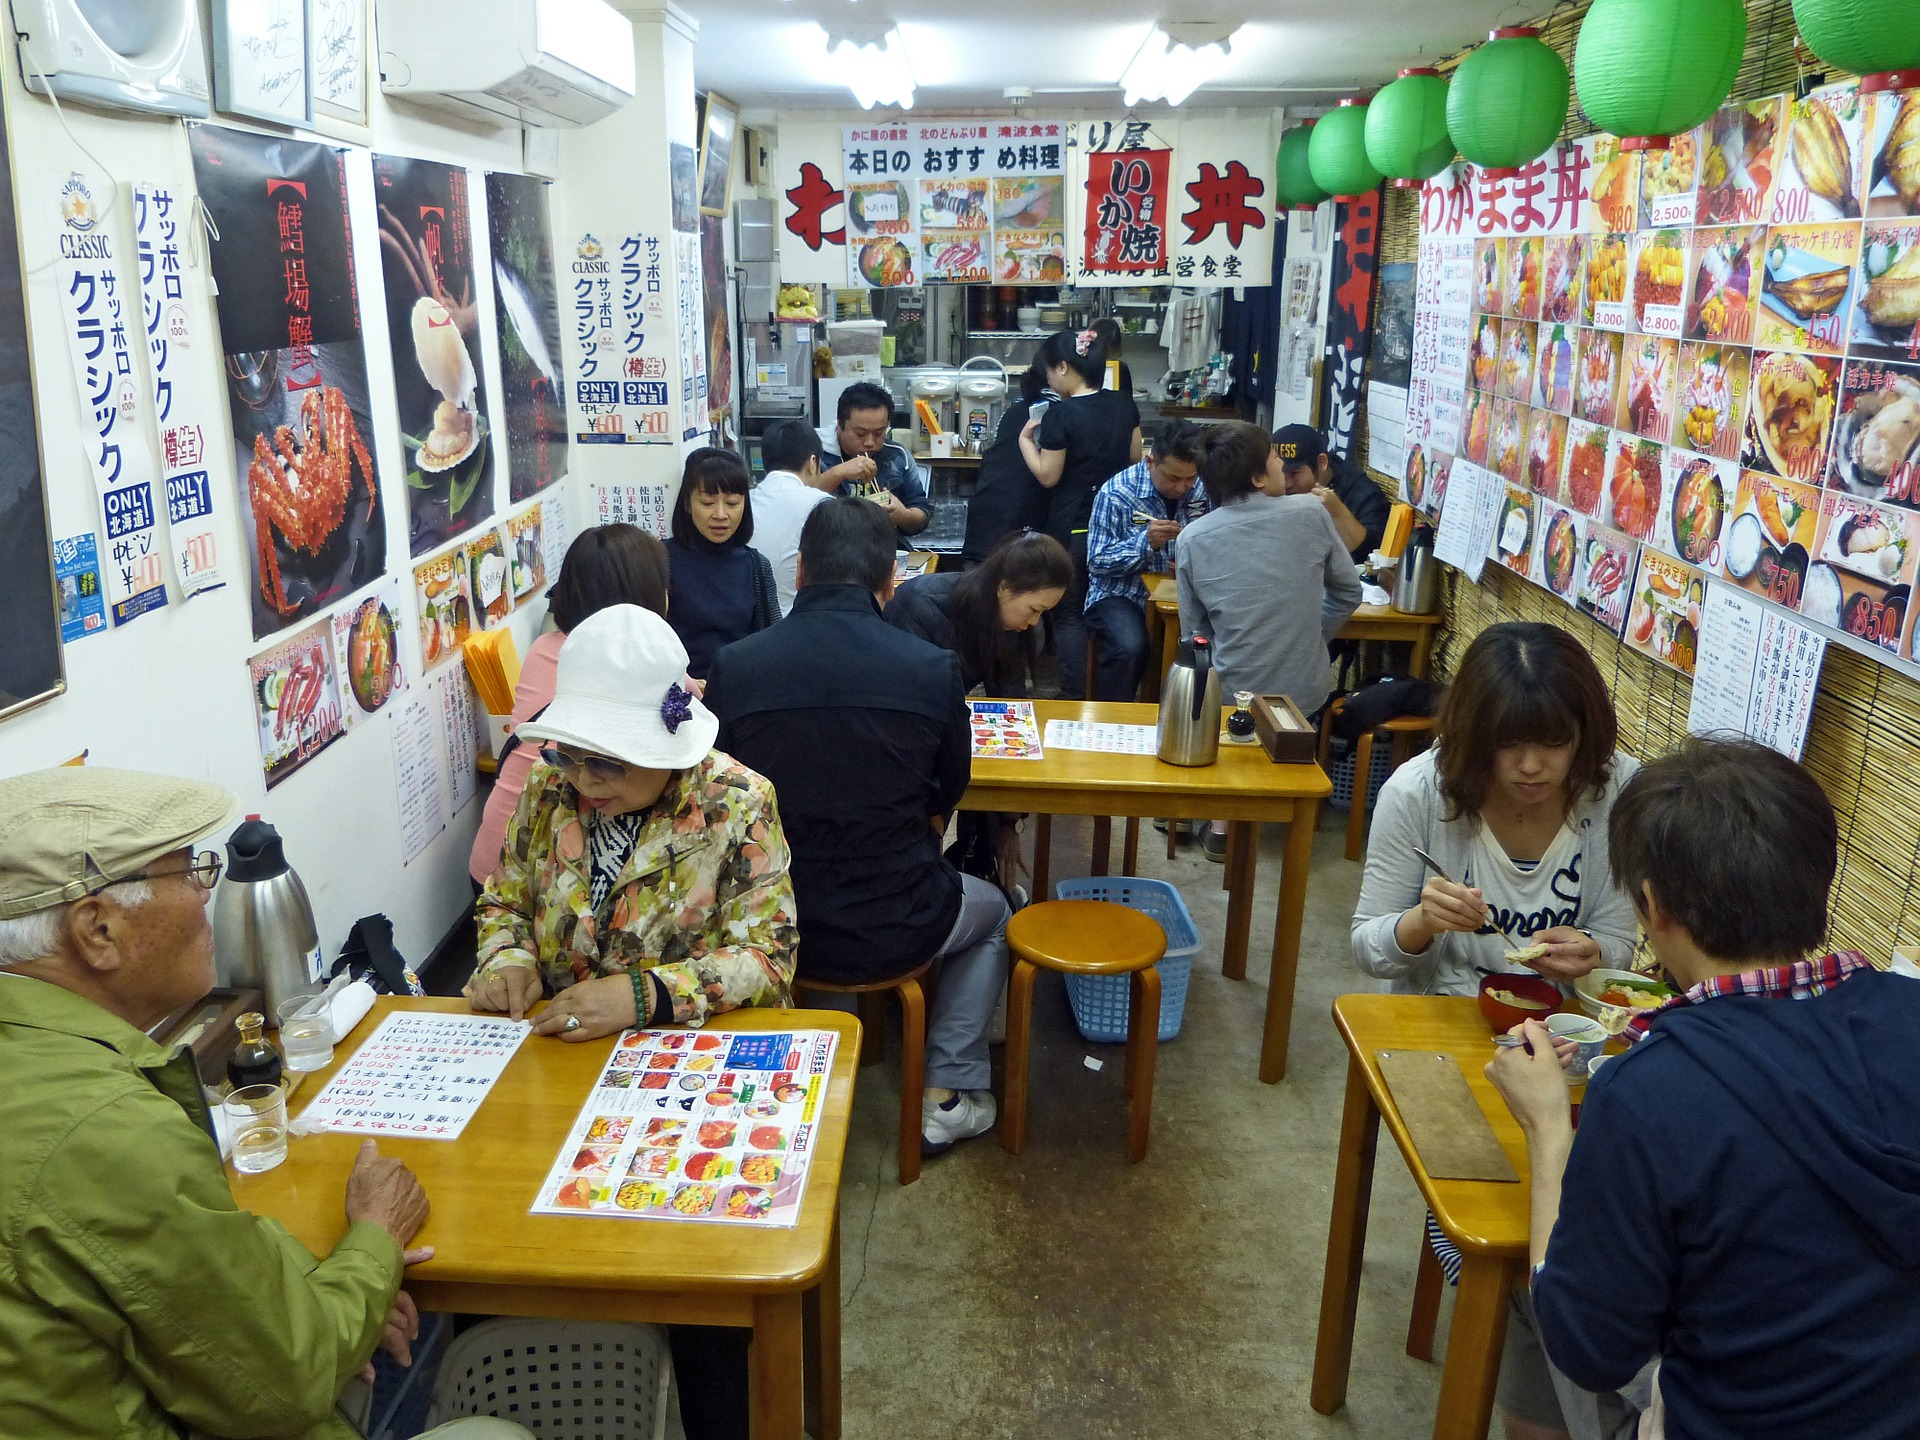 restauracie v Japonsku- clanok